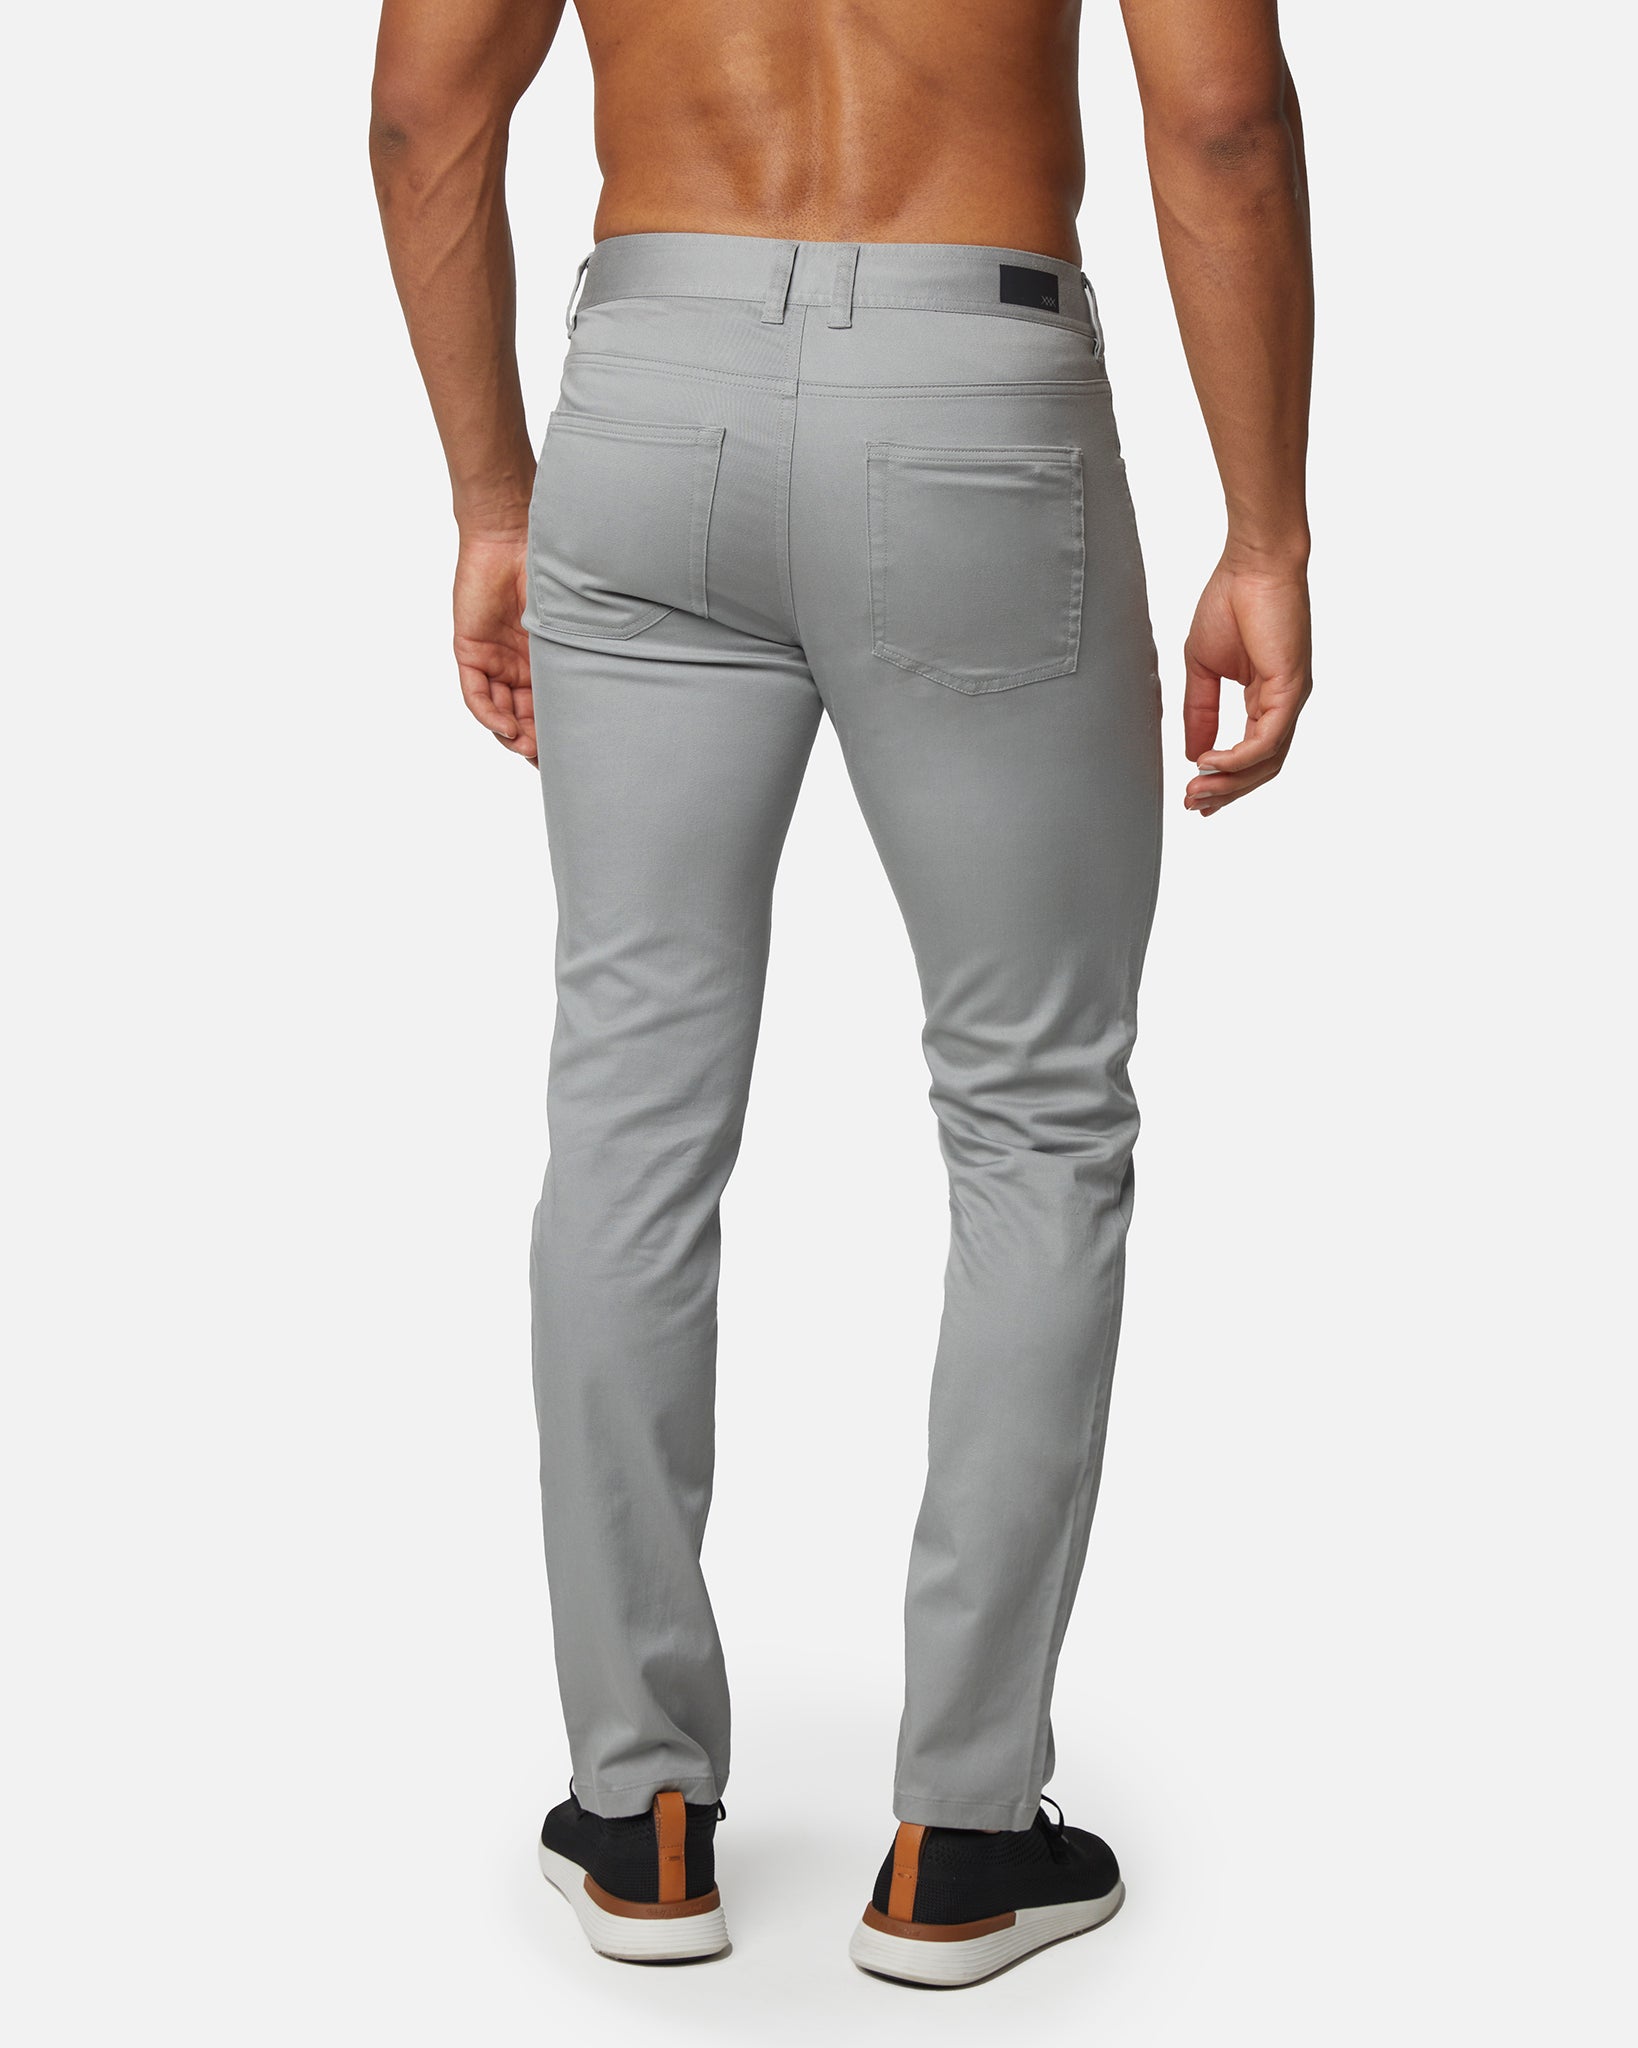 Narrow-Fit Five-Pocket Pants